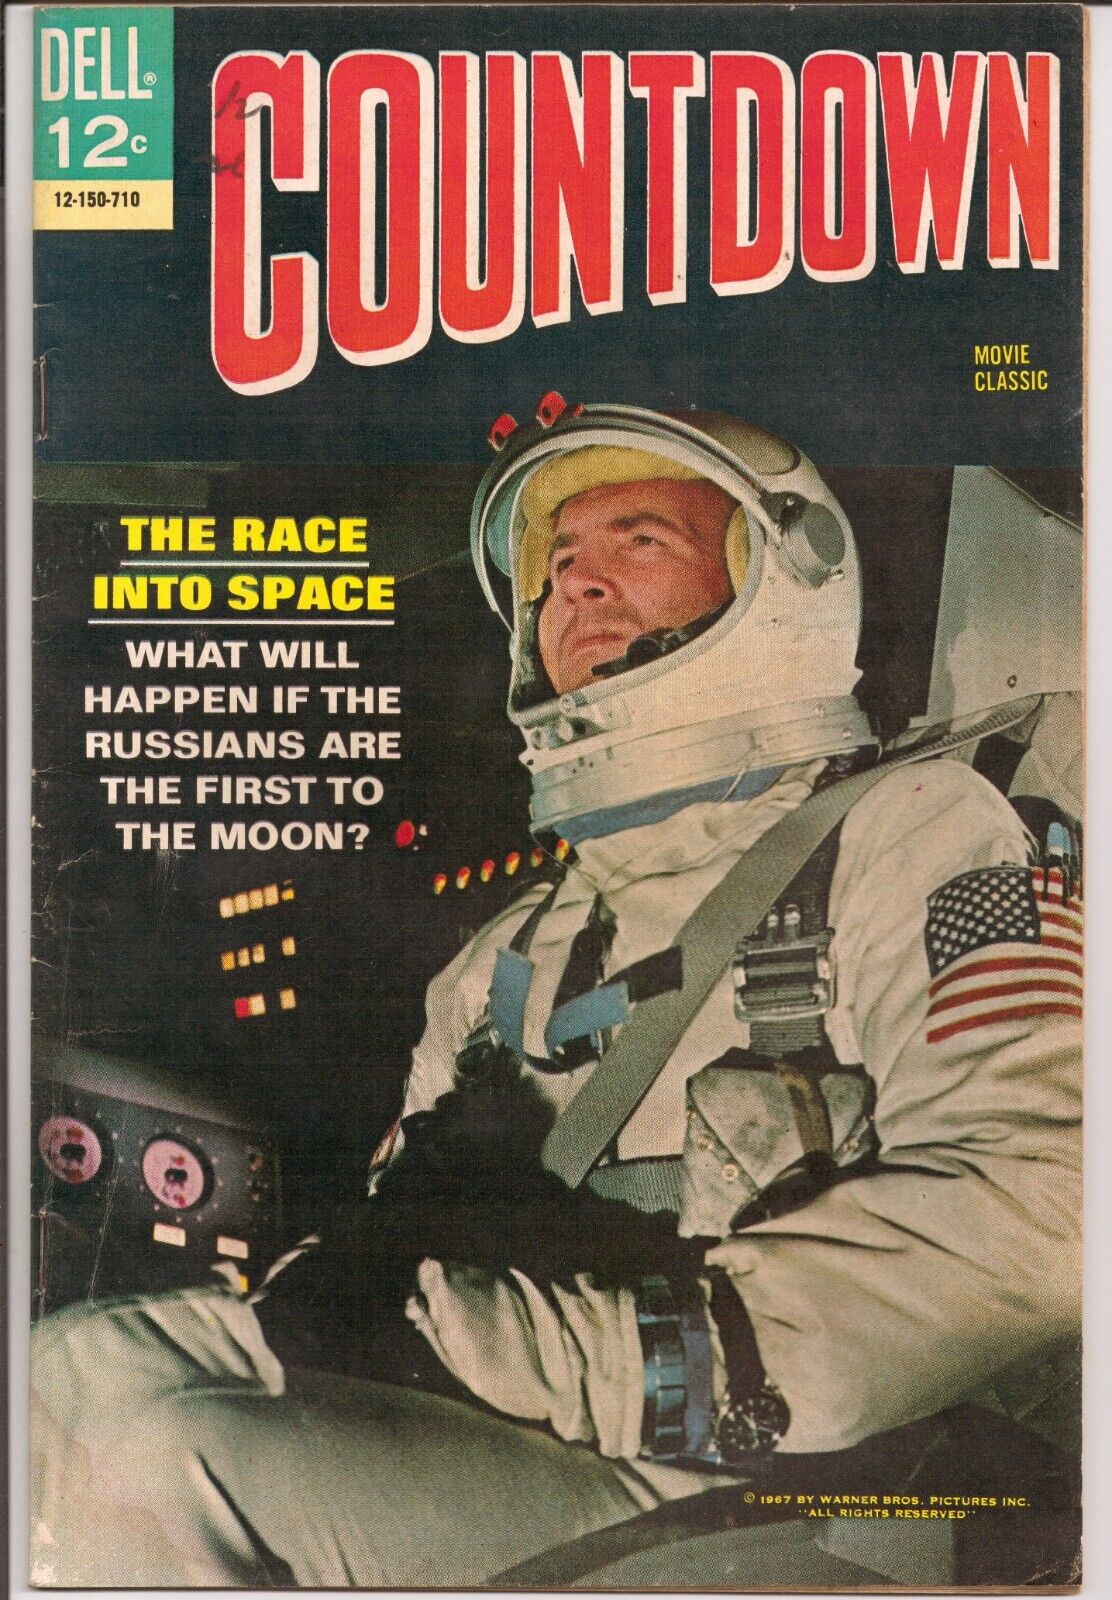 Countdown - Dell Movie Classic # 12-150-710, James Caan cover Fine Cond.